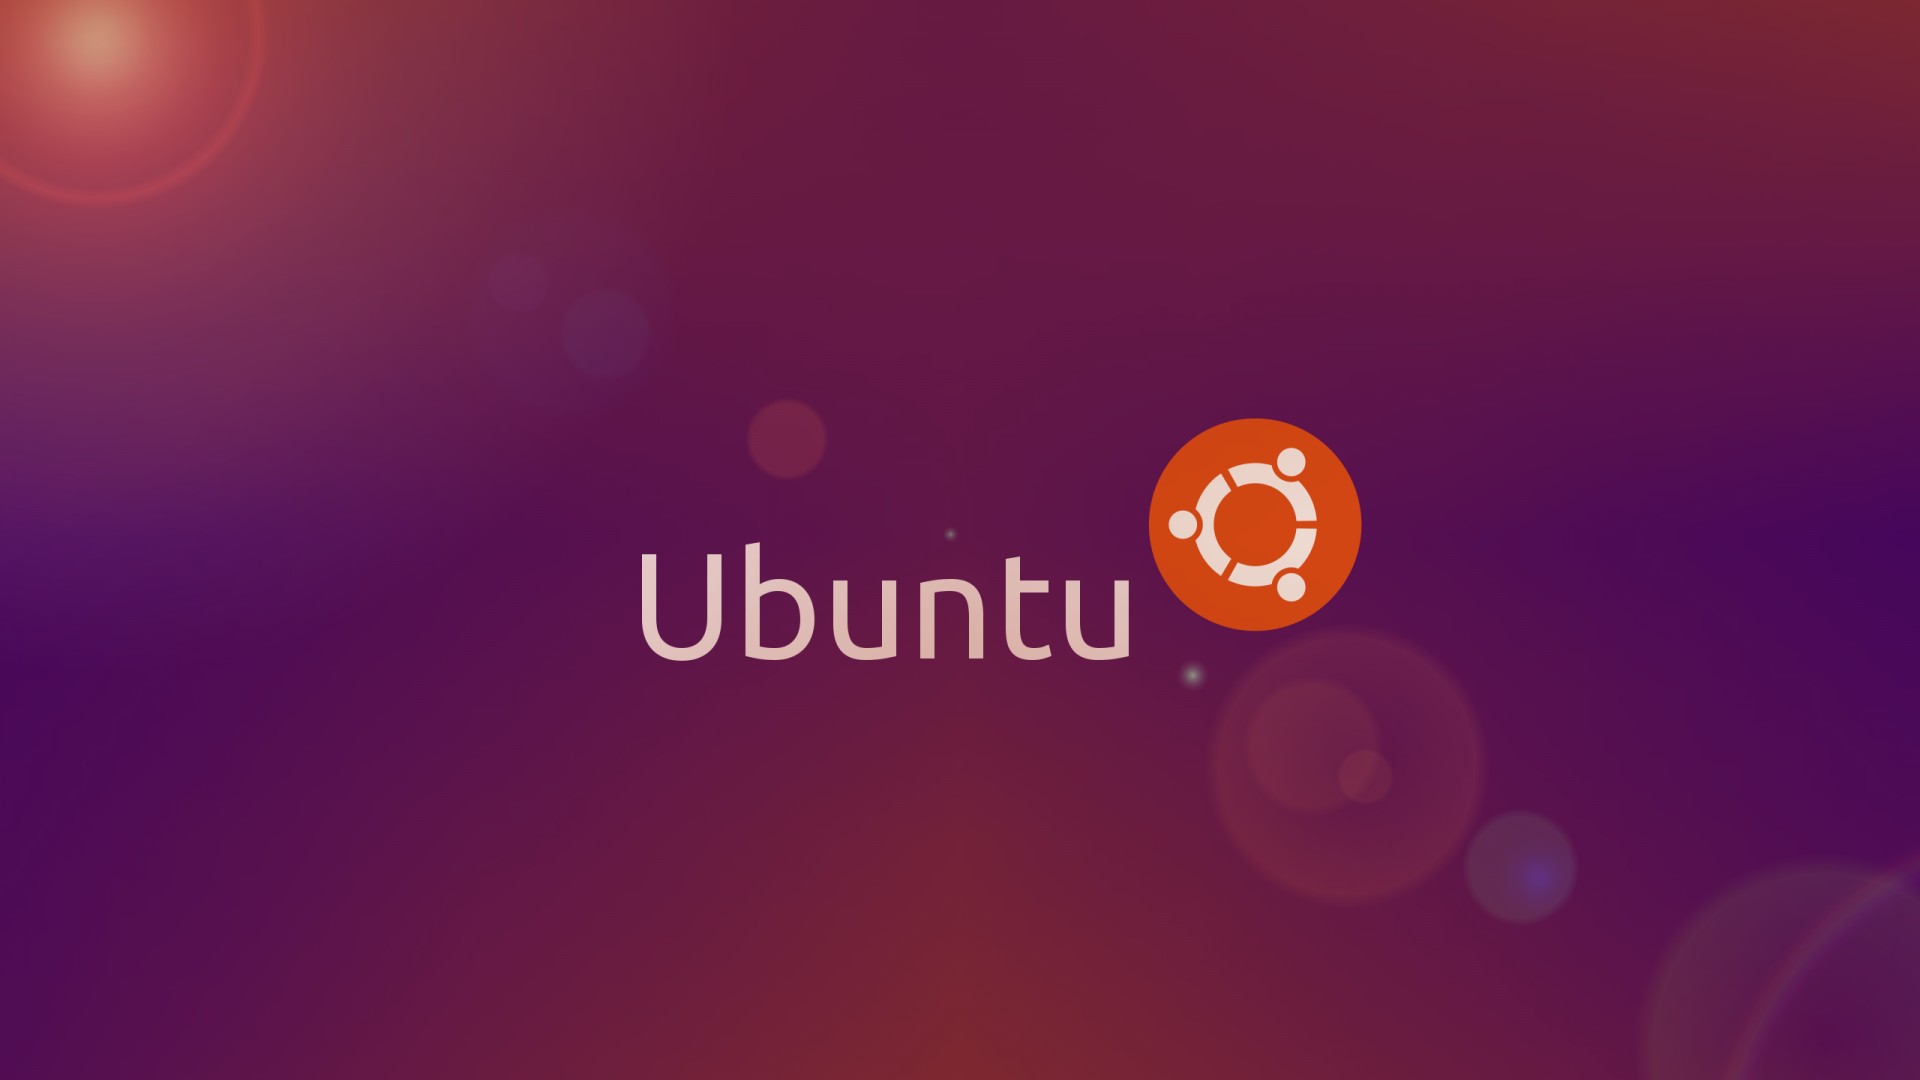 Get Ubuntu Wallpaper High Definition